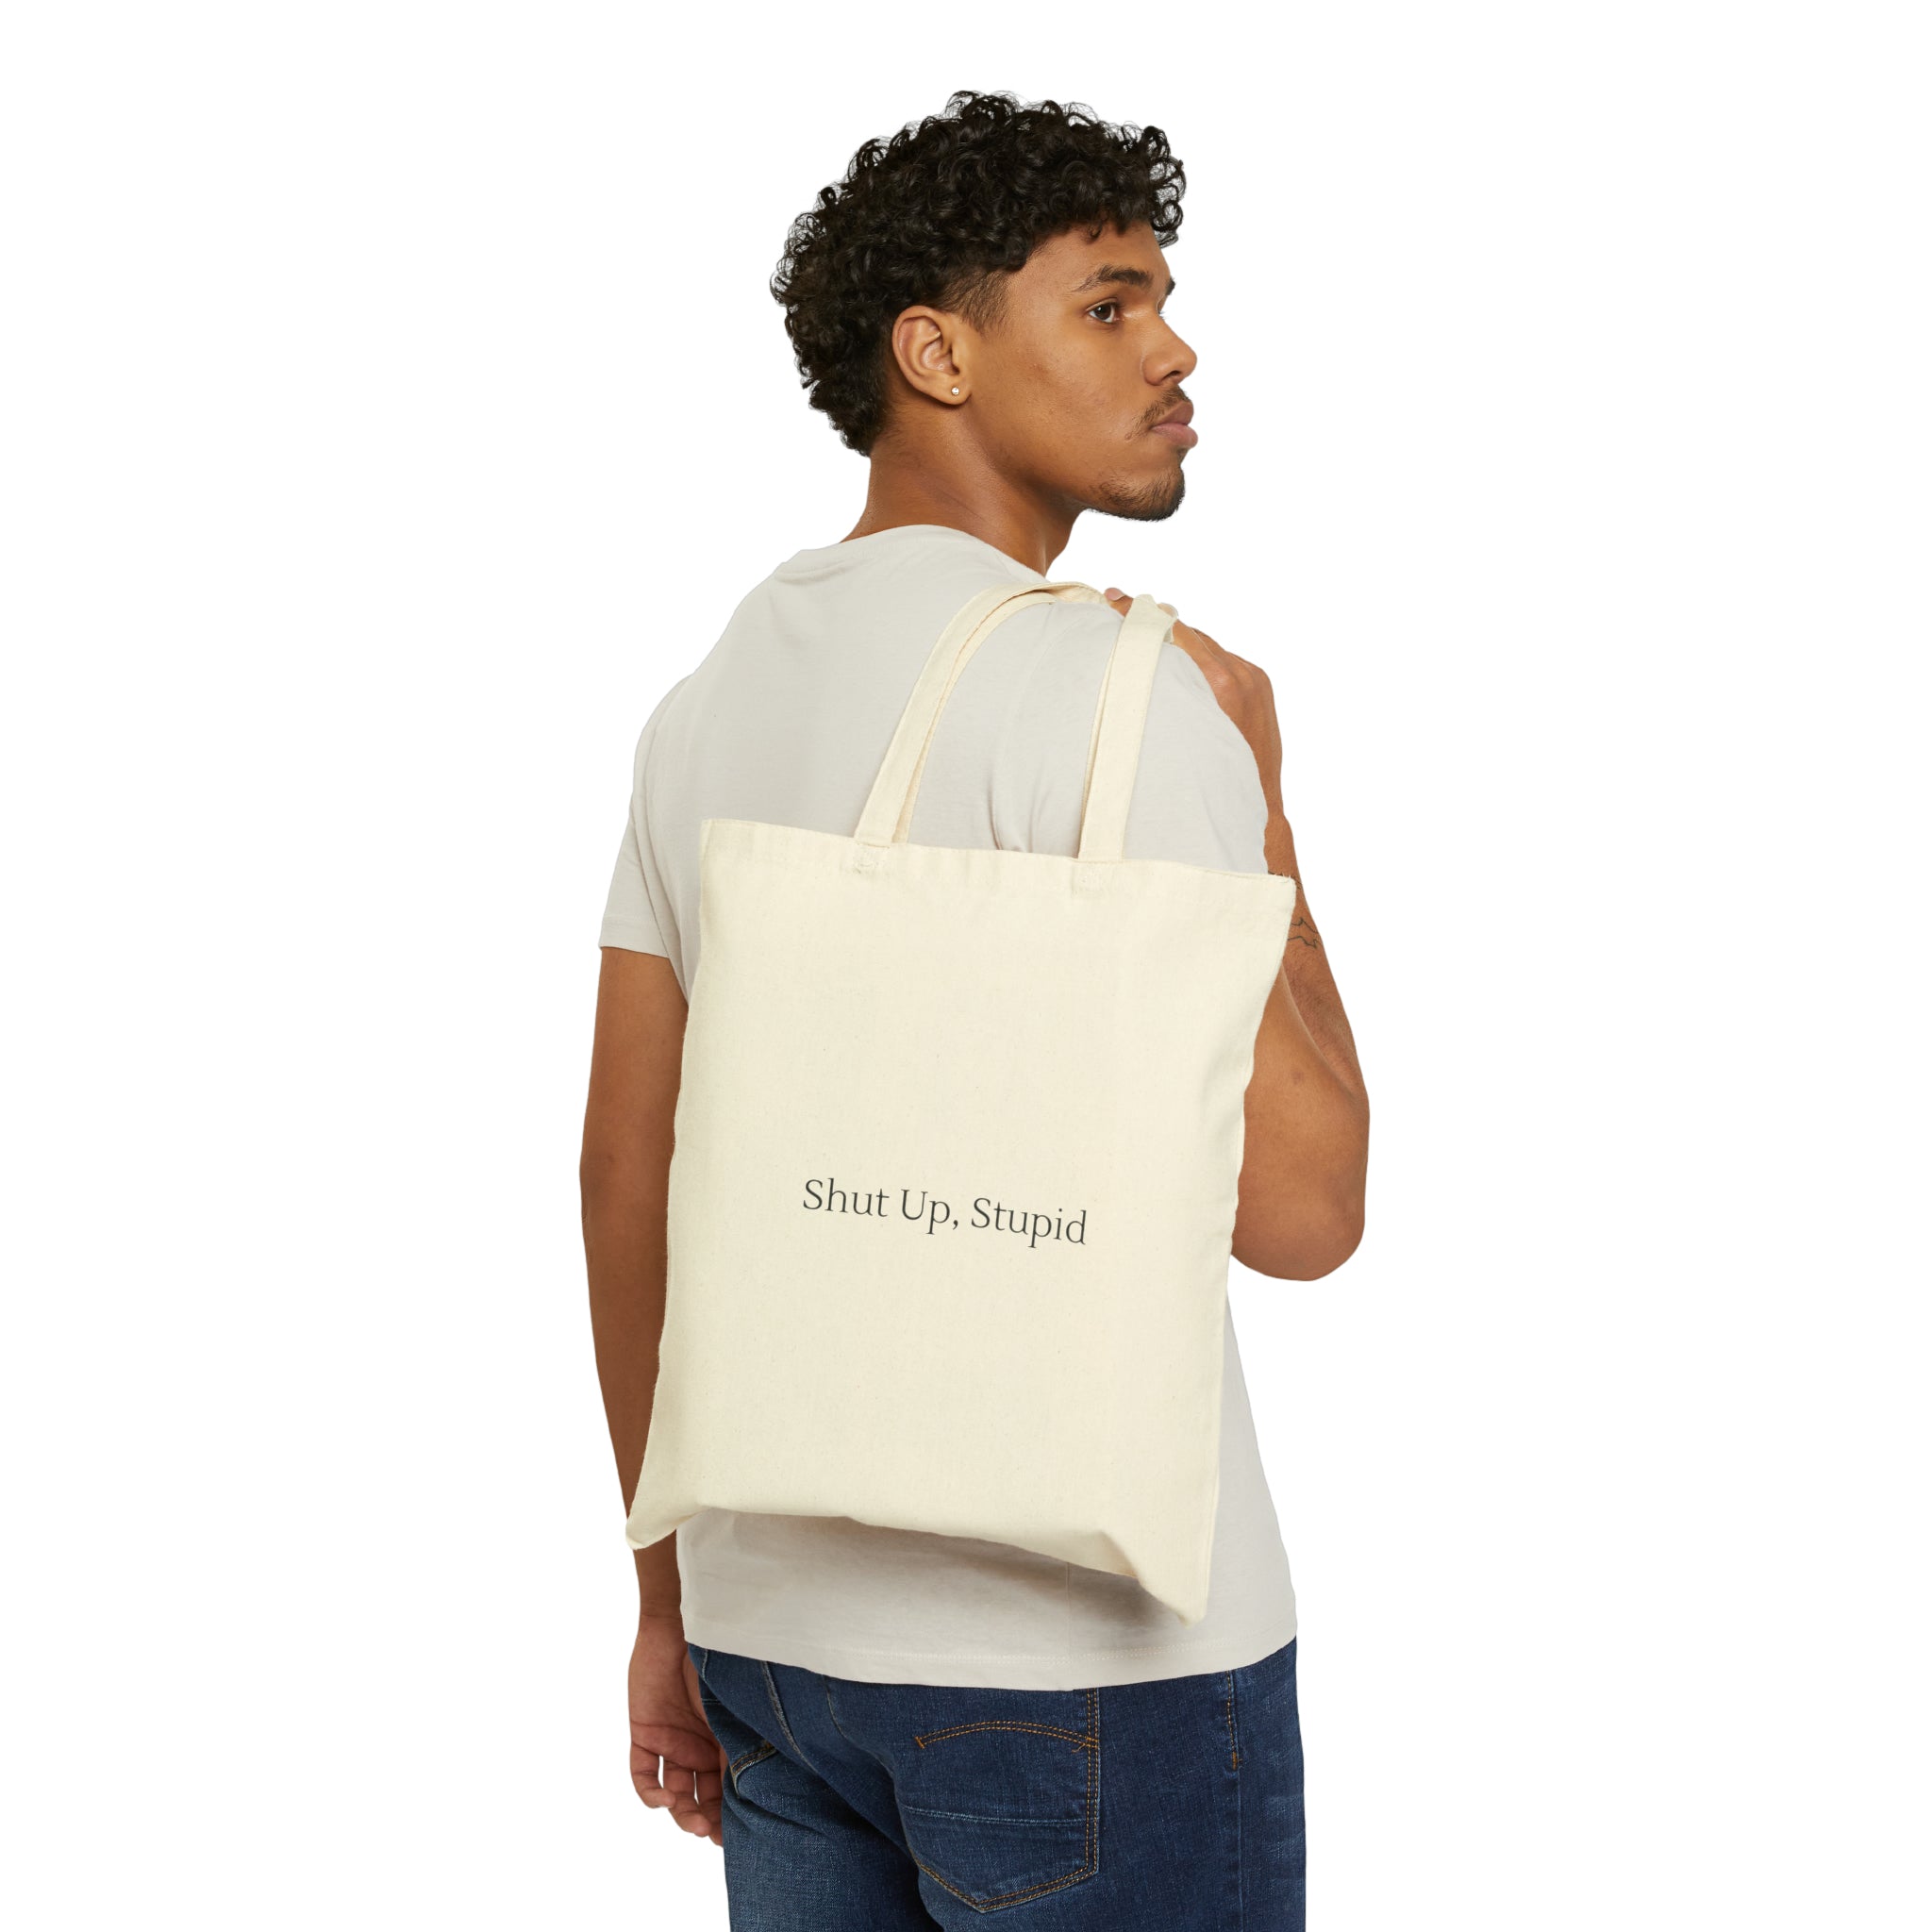 Shut Up, Stupid | Cotton Canvas Tote Bag